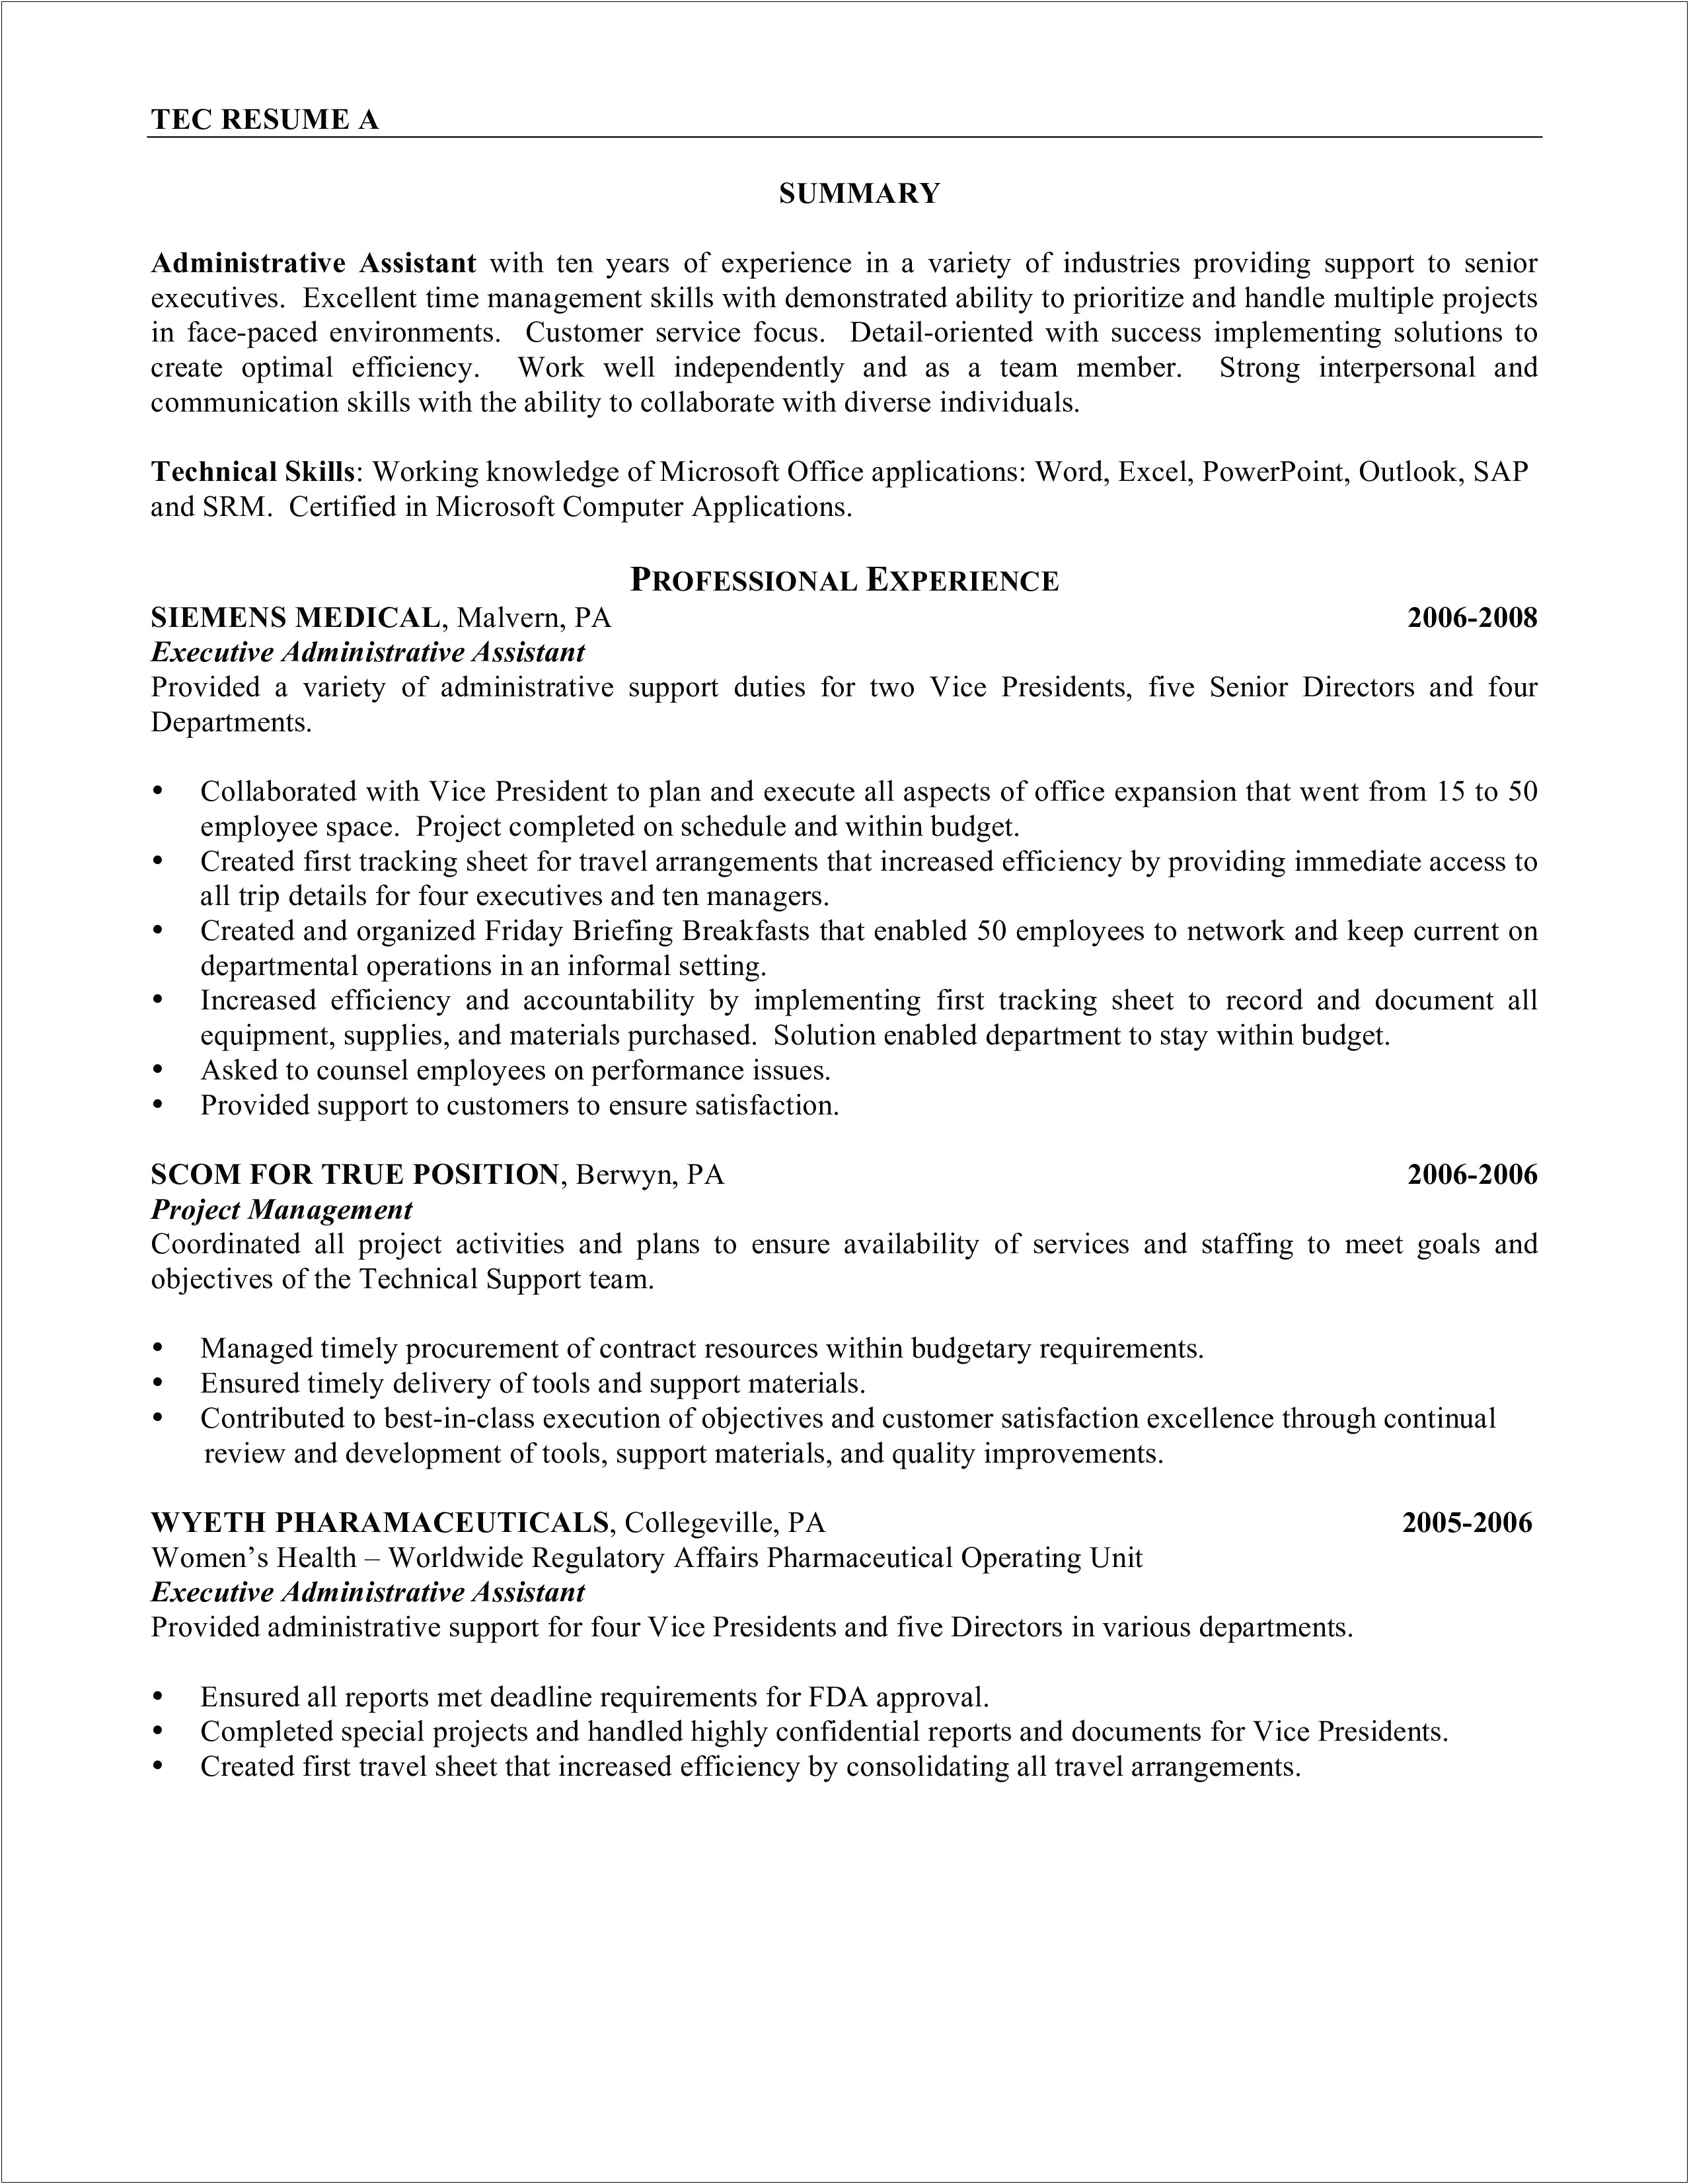 Administrative Assistant Job Description Resume Help